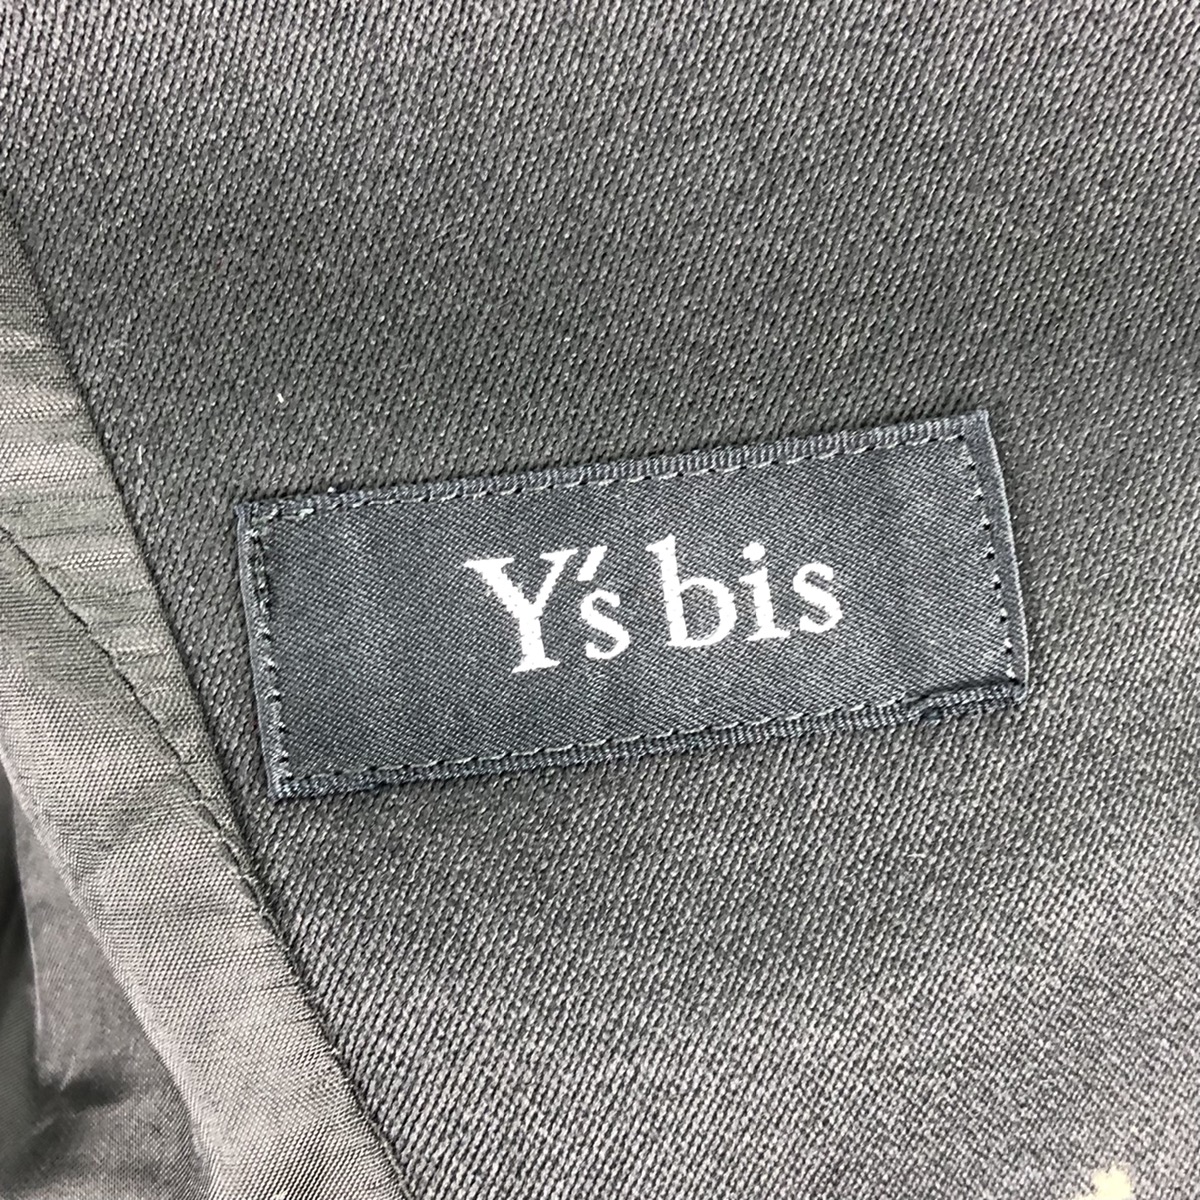 Vintage Y's Bis Cropped Blazer Coat by Yohji Yamamoto - 13